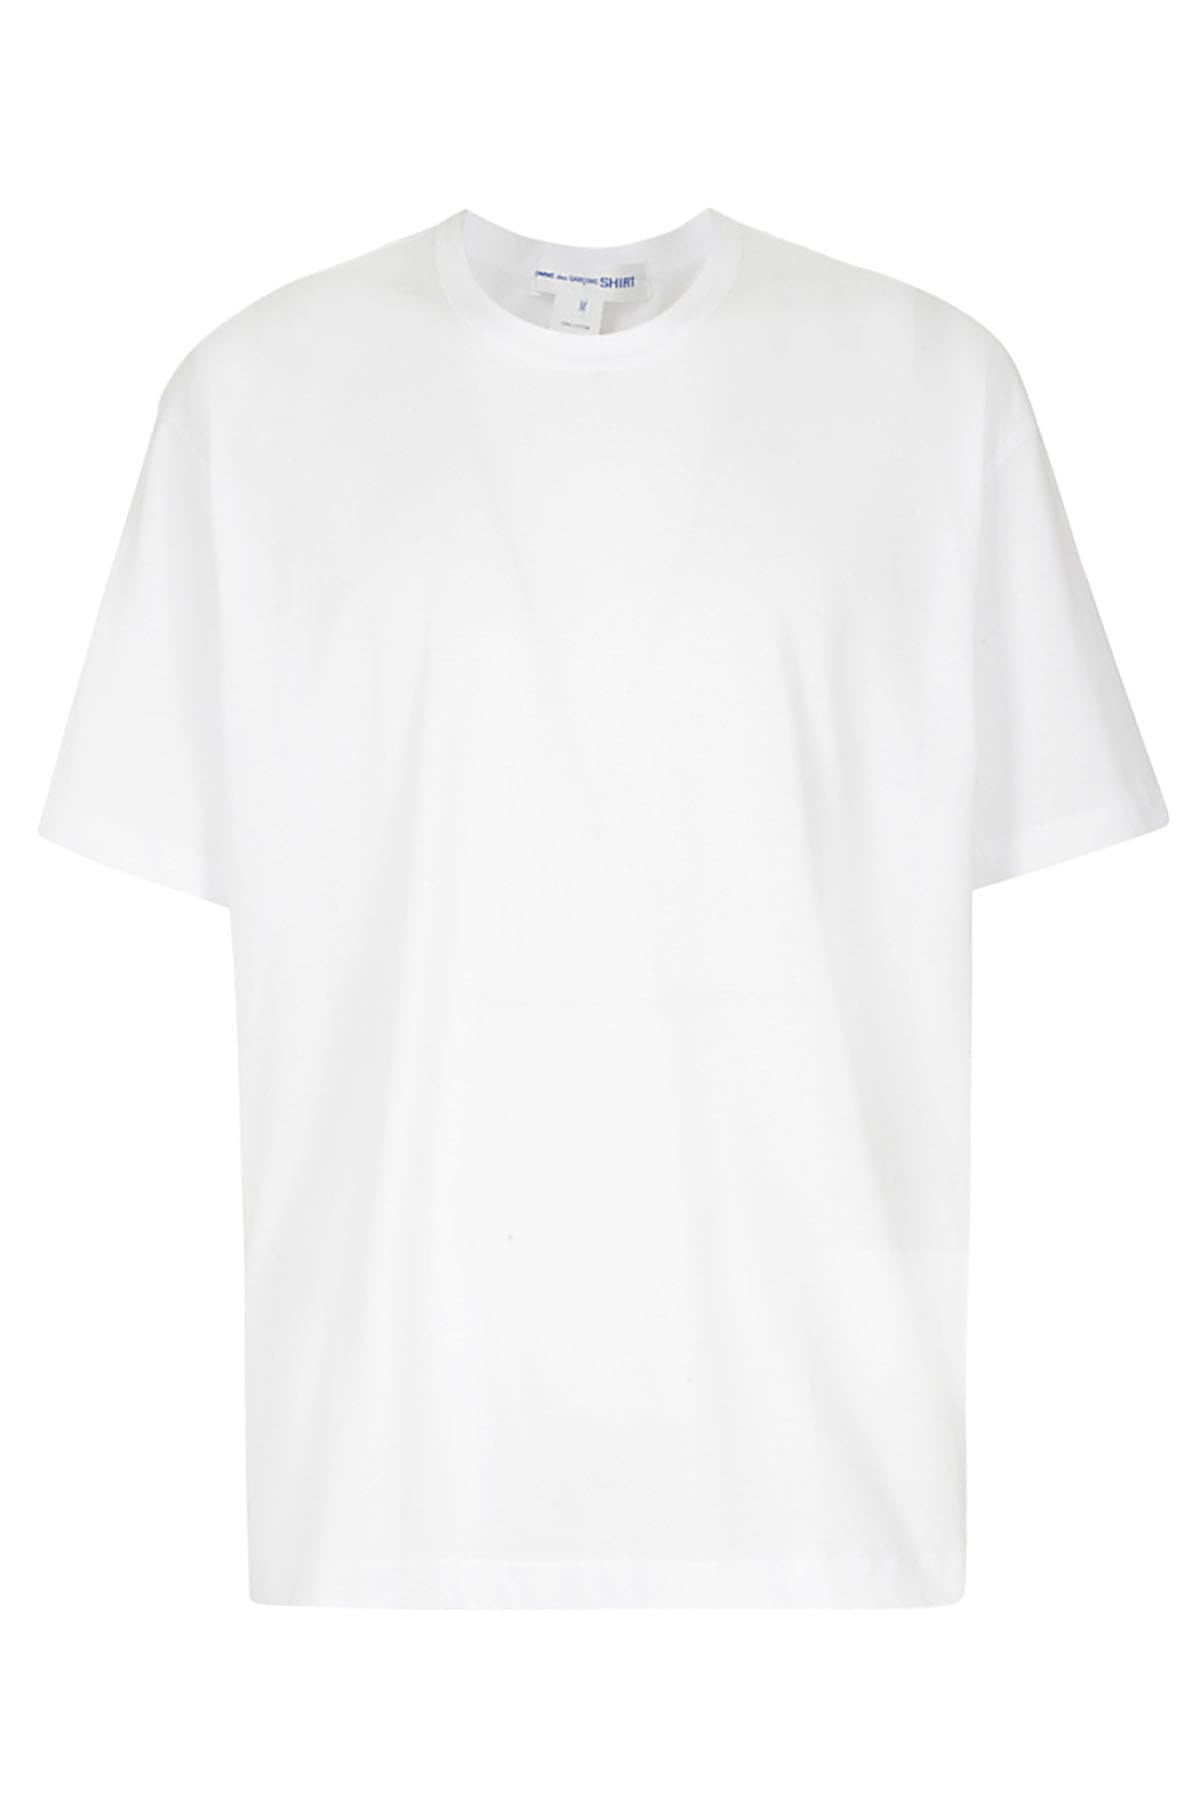 Comme Des Garçons Shirt Tshirt Knit In White